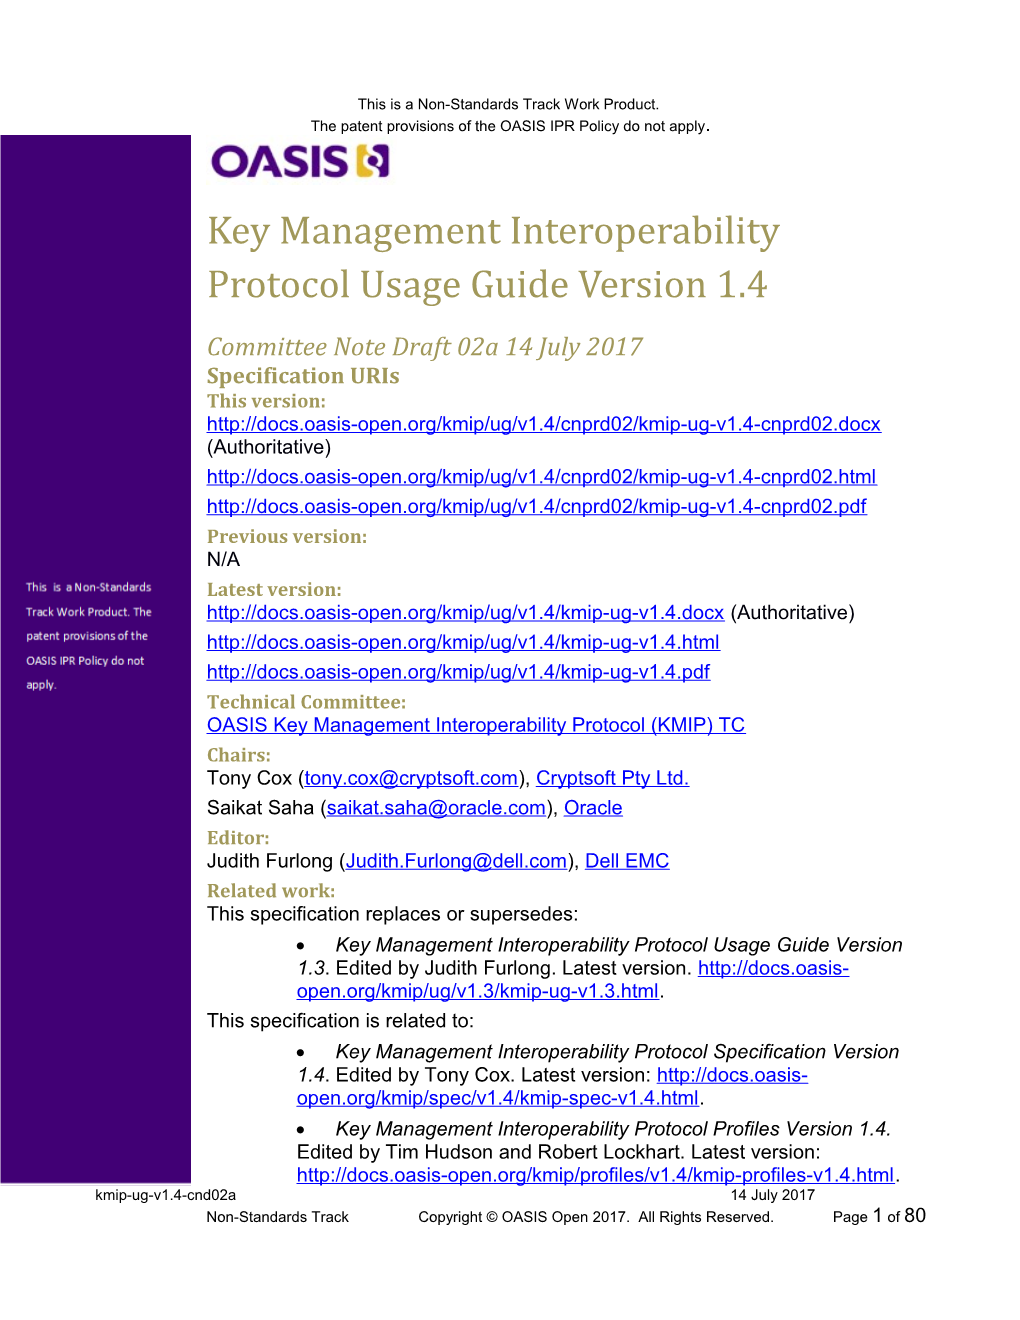 Key Management Interoperability Protocol Usage Guide Version 1.4